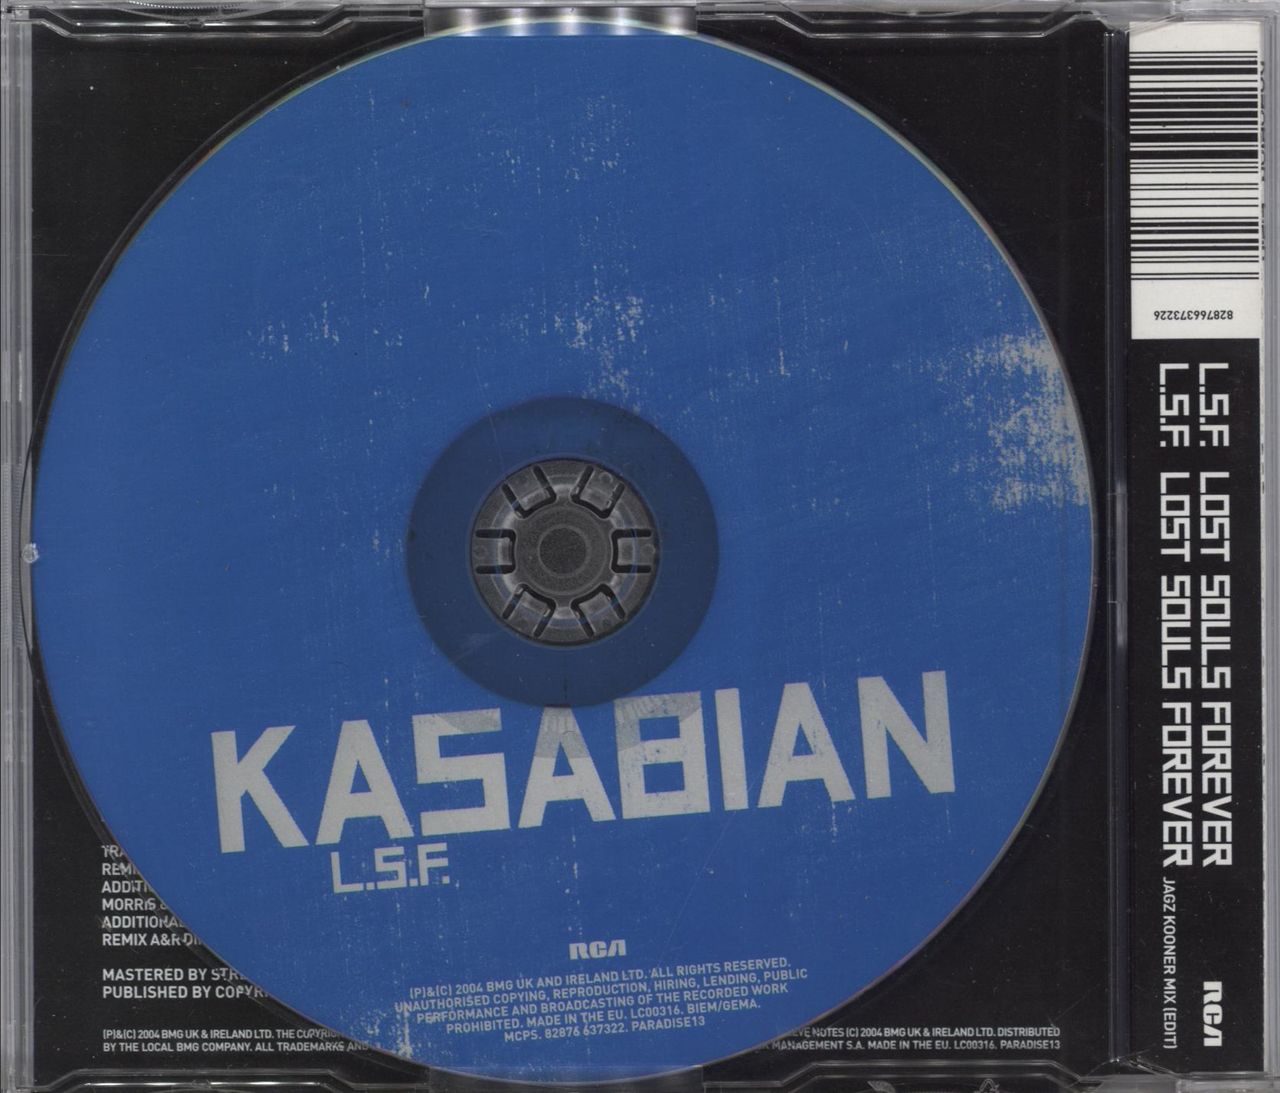 Kasabian L.S.F. [Lost Souls Forever] UK 2-CD single set (Double CD single) 828766373226